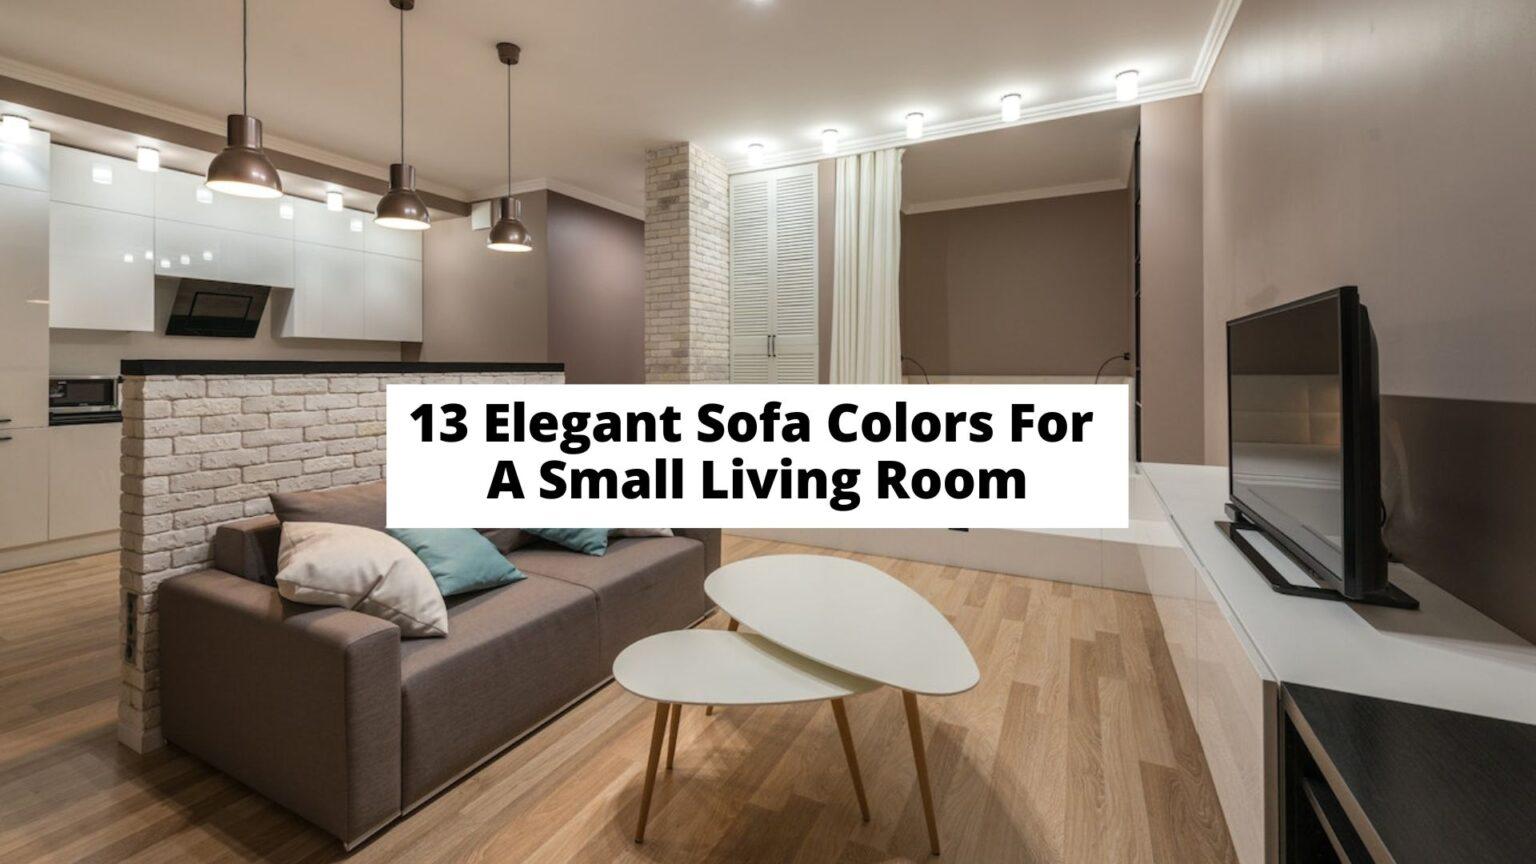 13 Elegant Sofa Colors For A Small Living Room - Craftsonfire